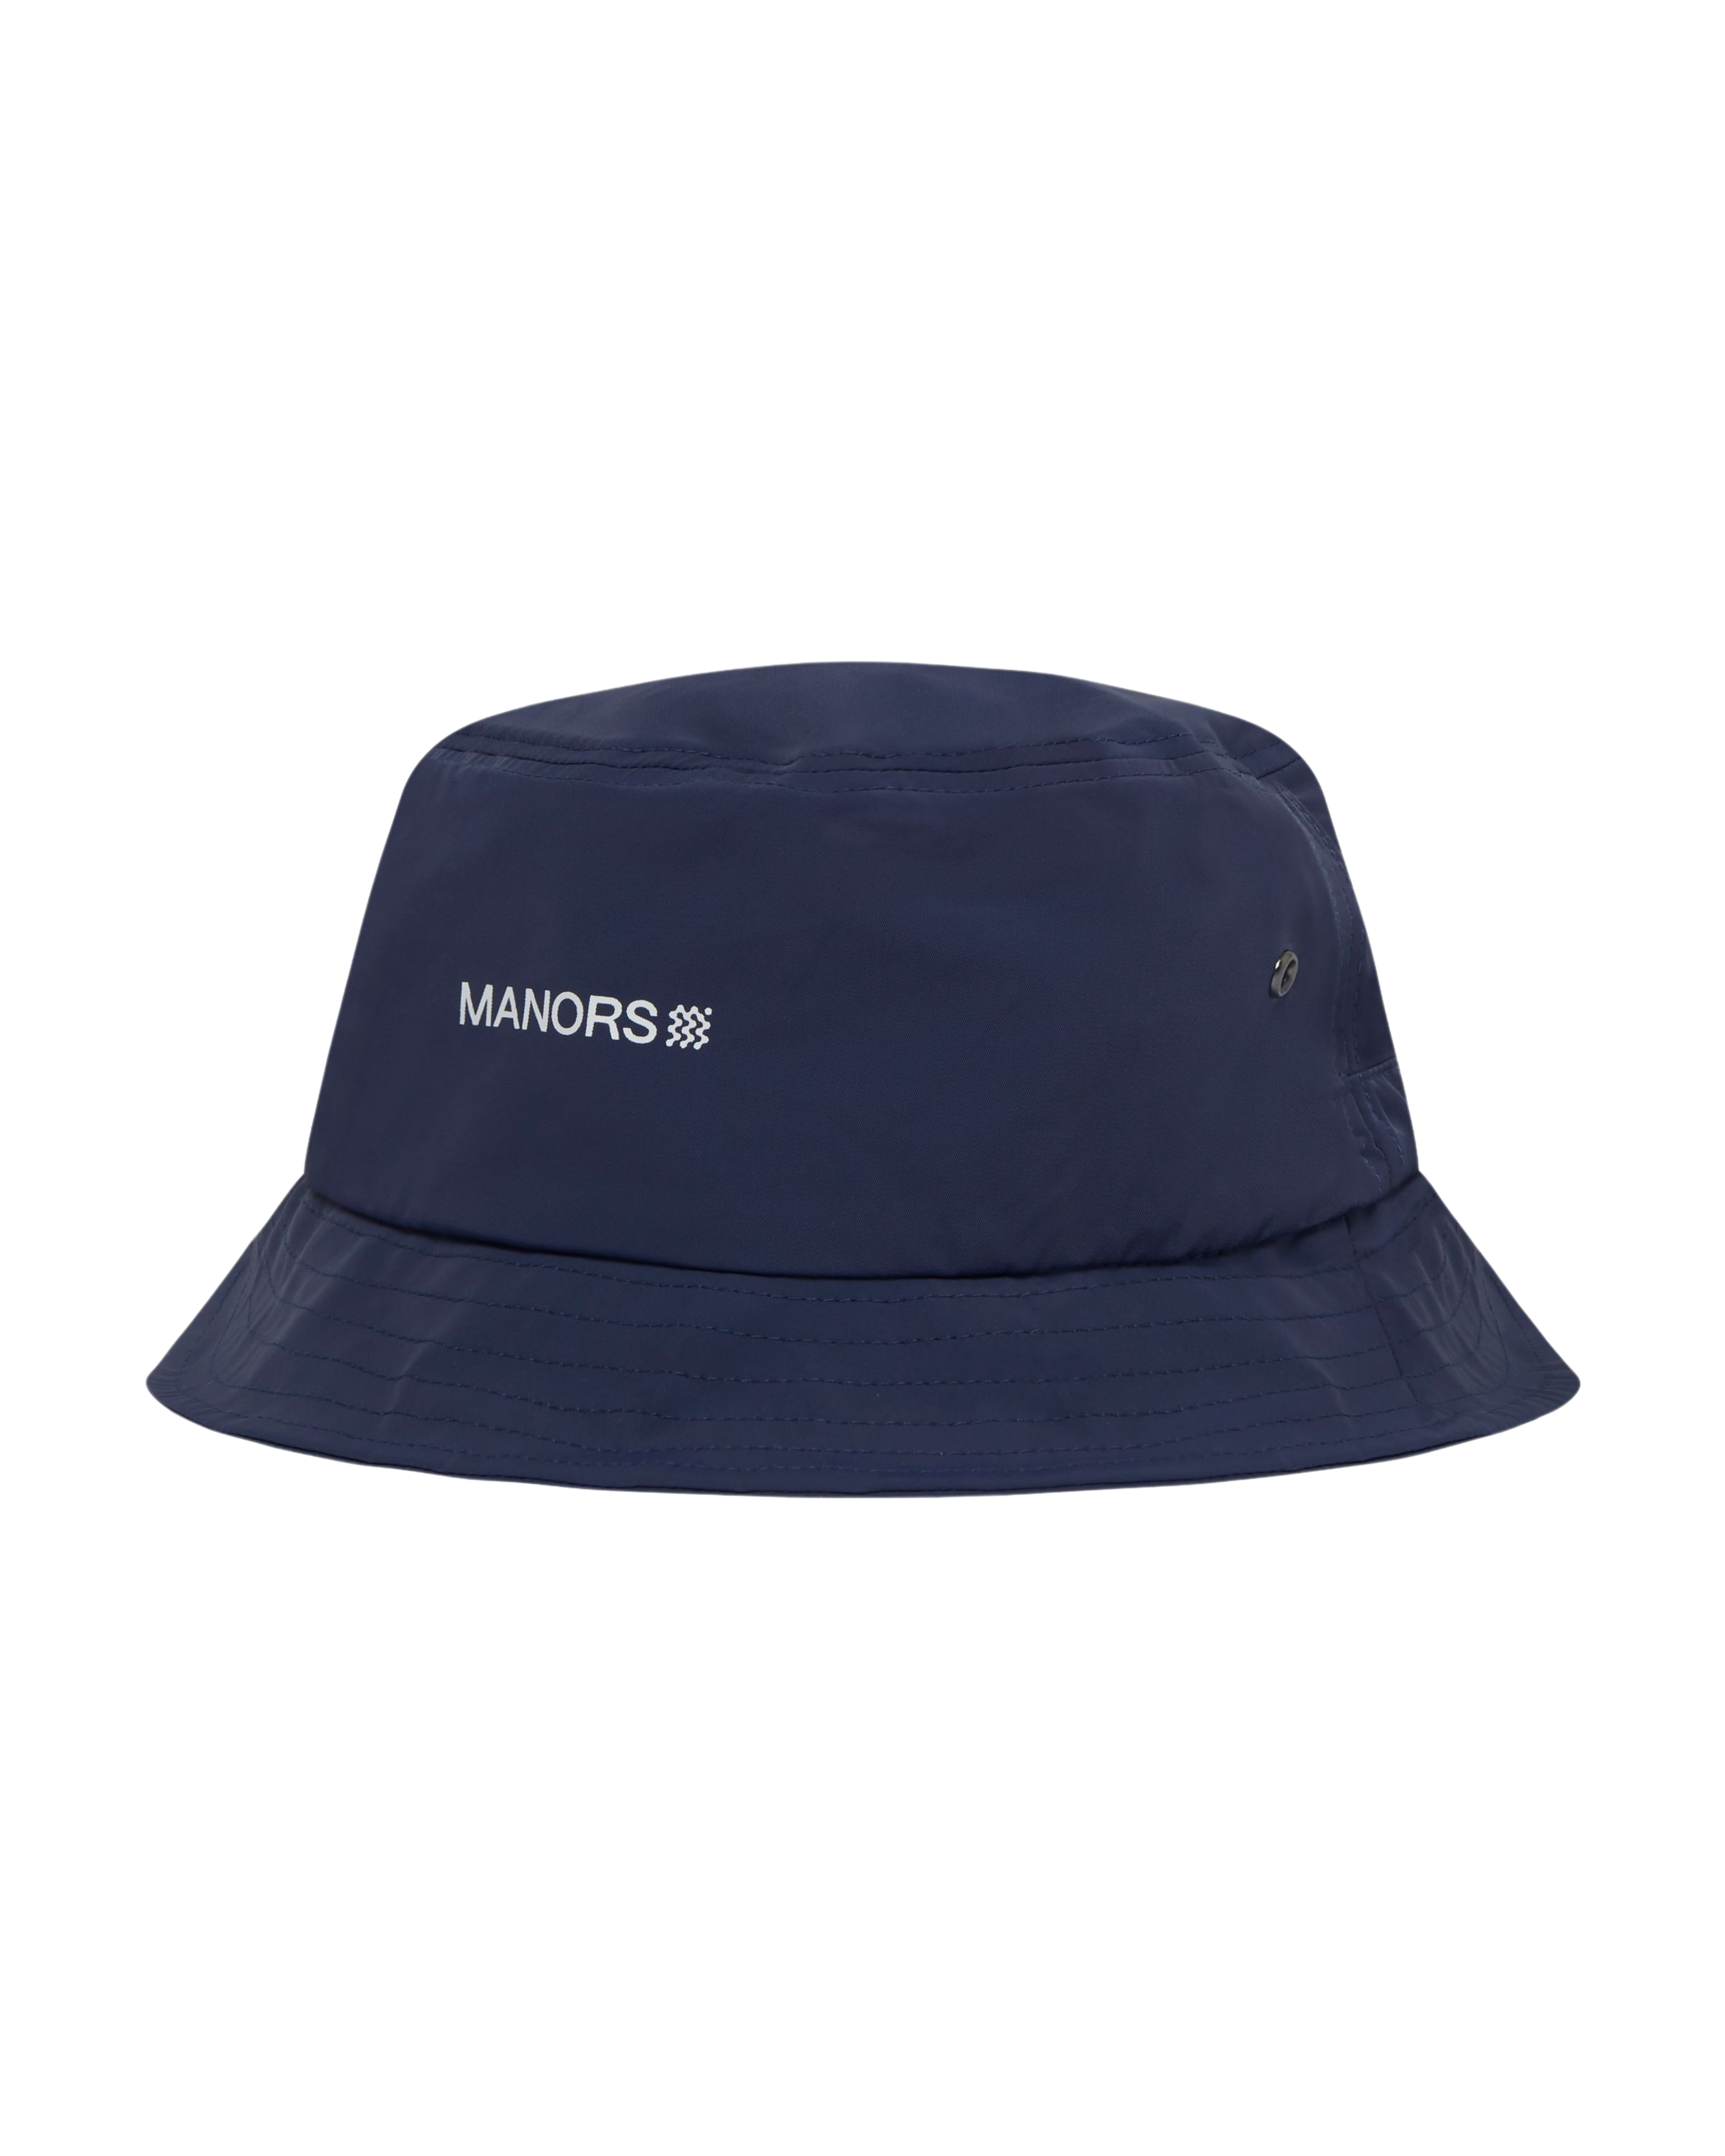 MANORS Ranger Bucket Hat Navy | golf and sports fashion brands at agorabkk 